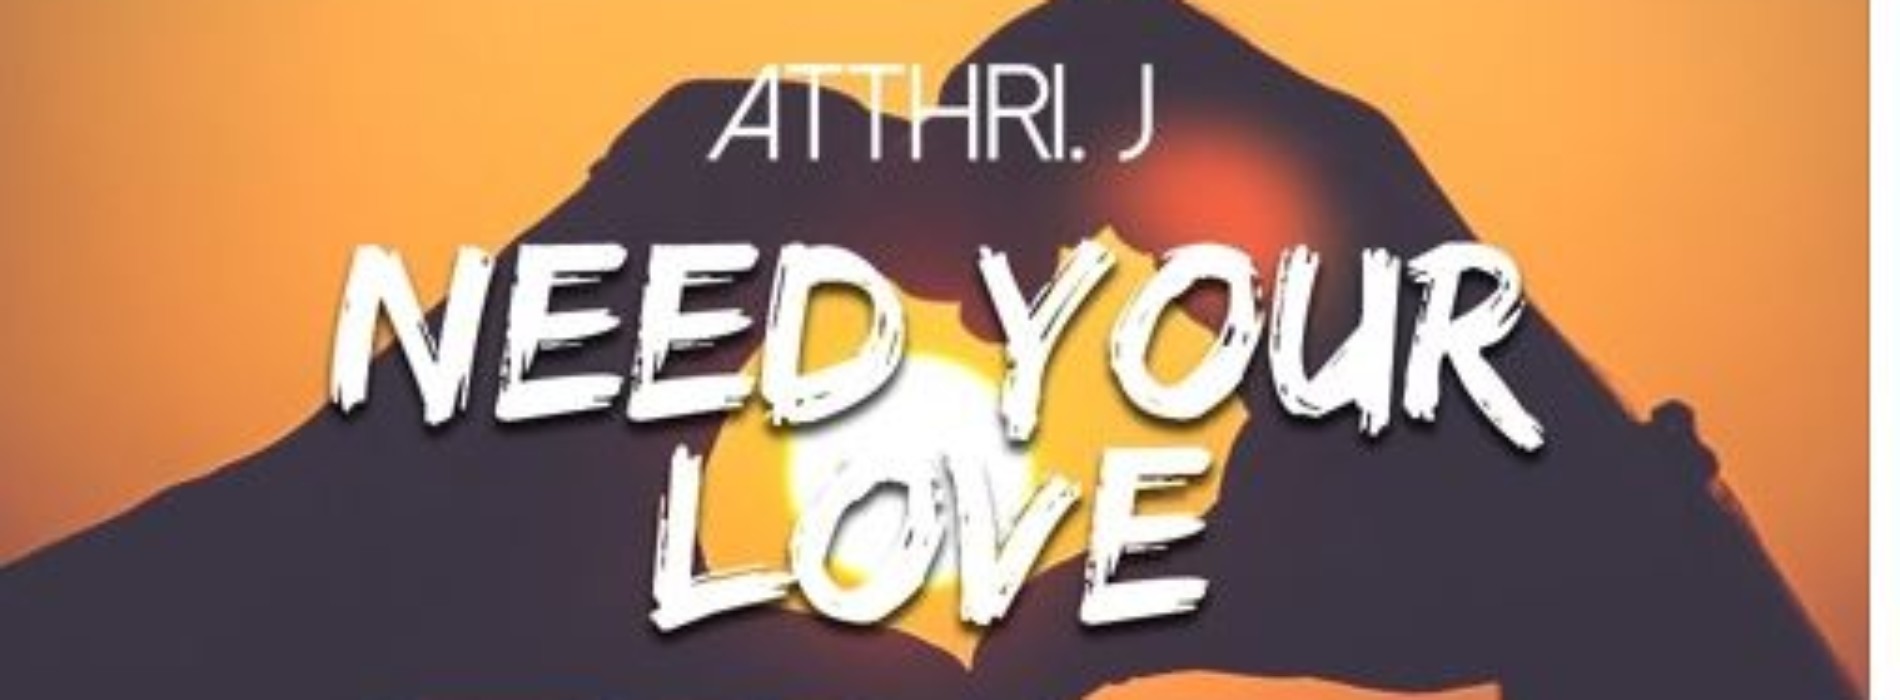 Atthri. J – Need Your Love